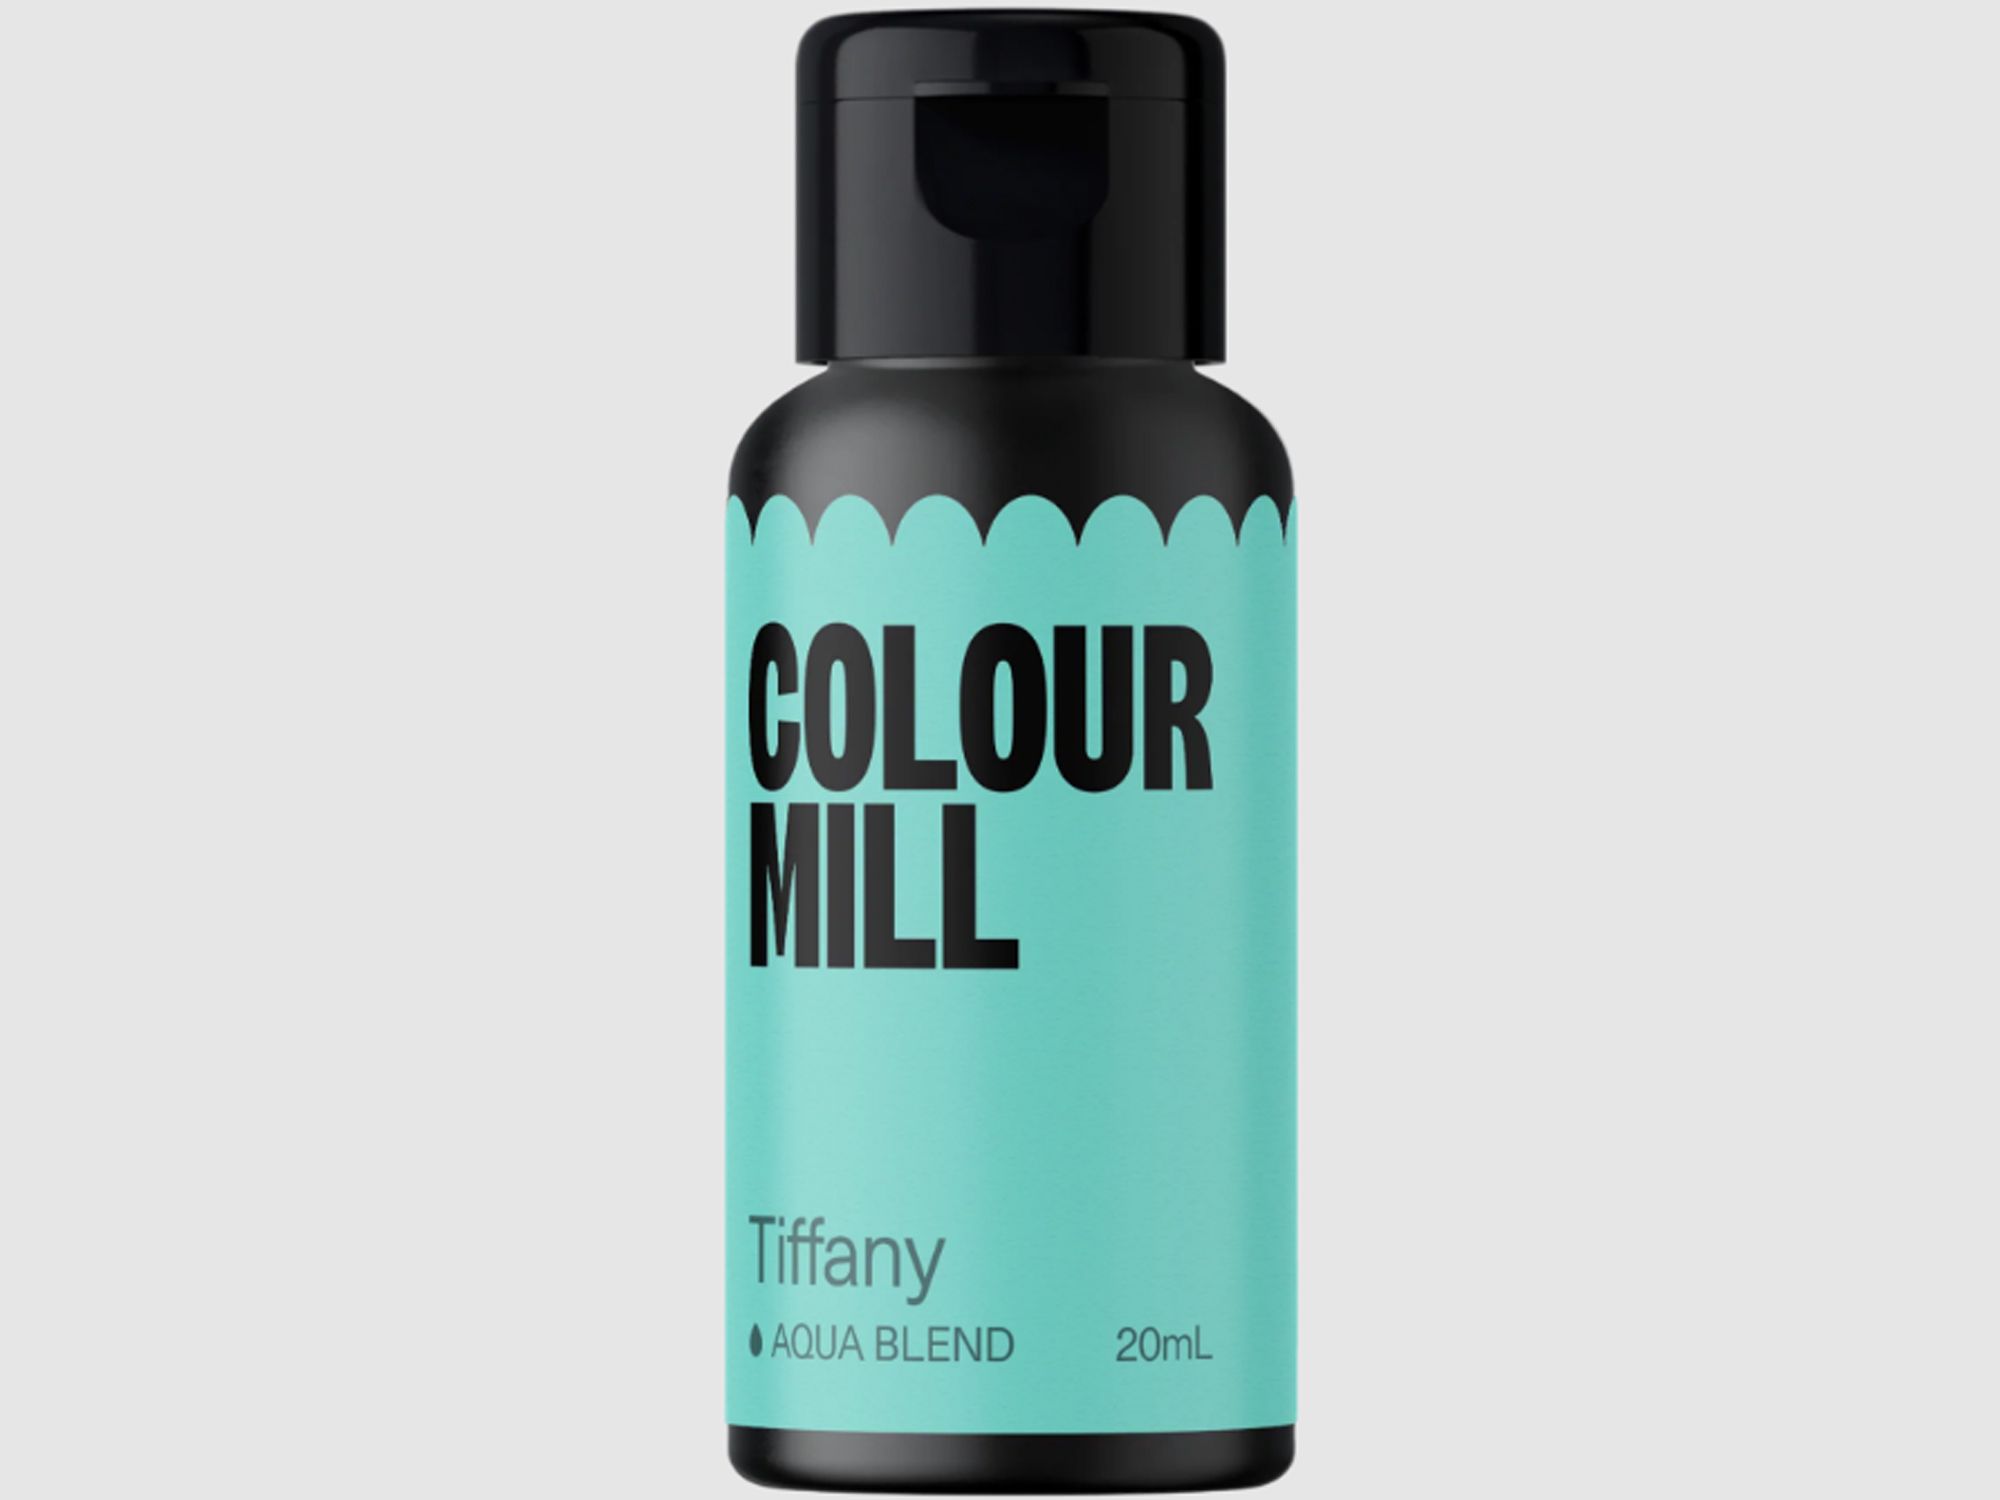 Colour Mill Tiffany (Aqua Blend) 20ml